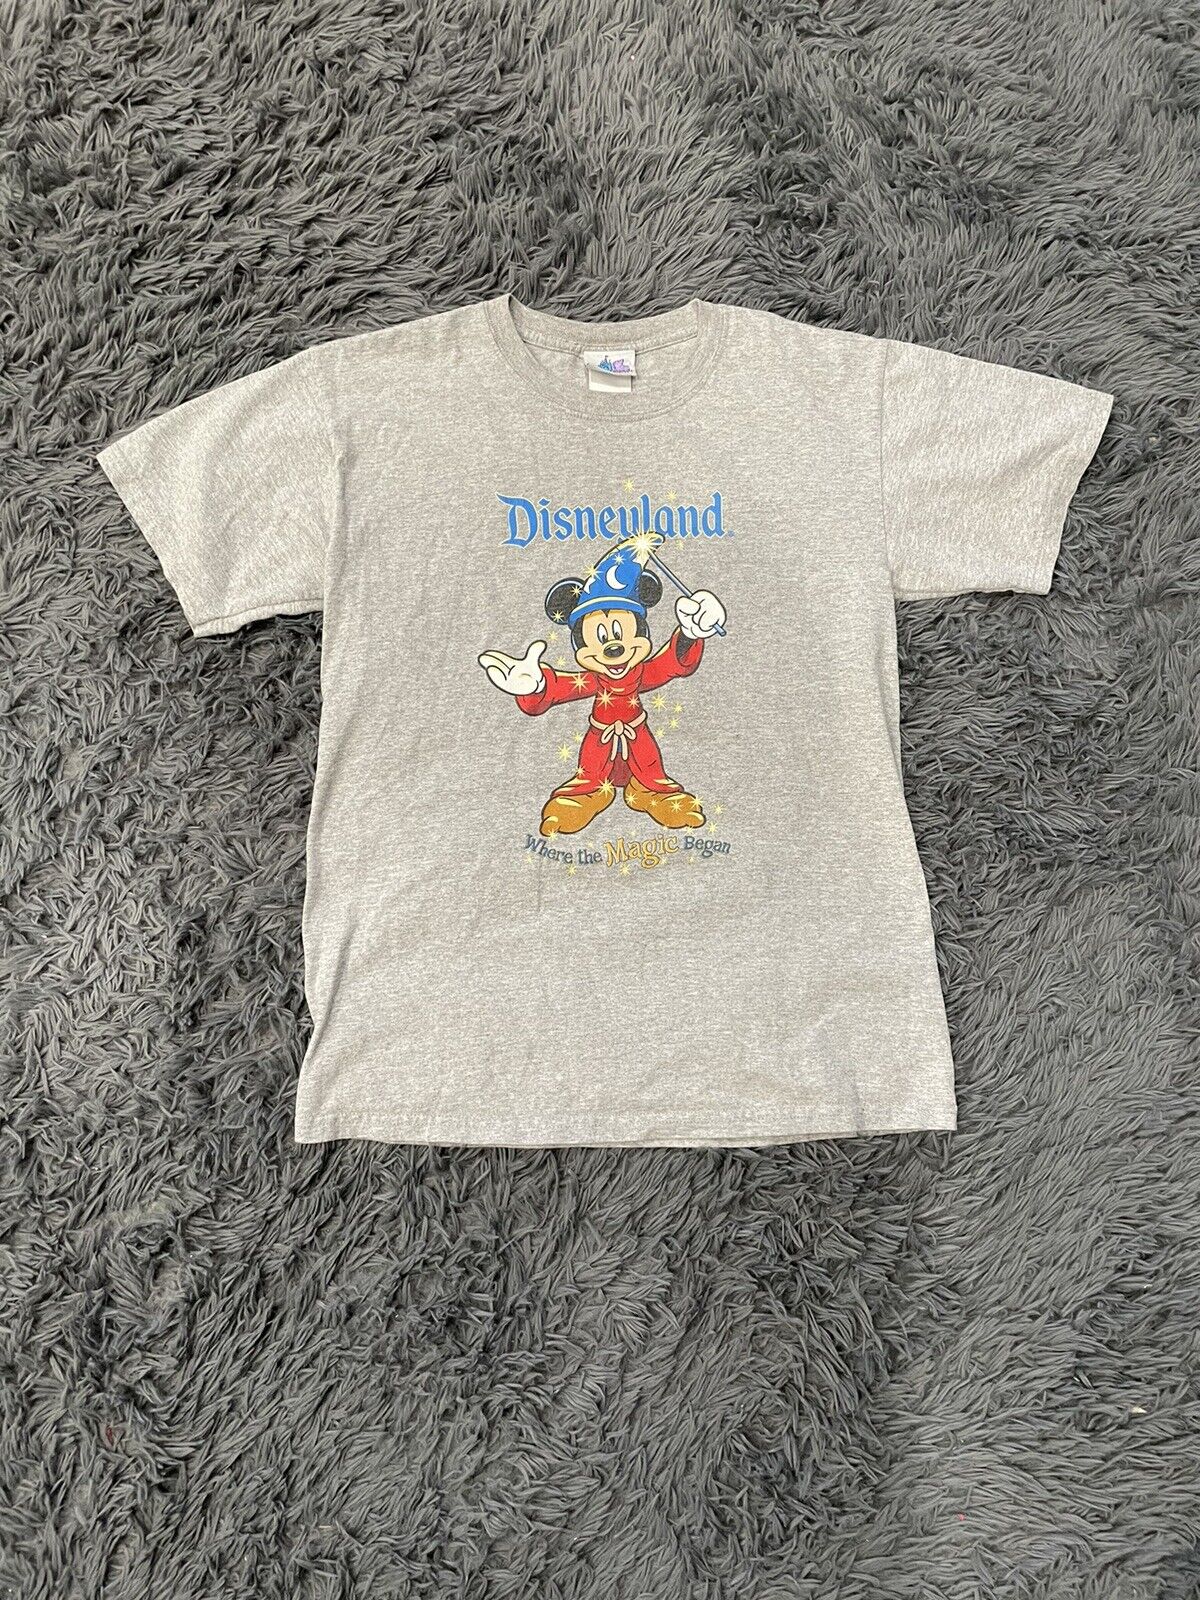 Vintage Disney Land Resort Mickey Mouse Where The Magic Began Shirt